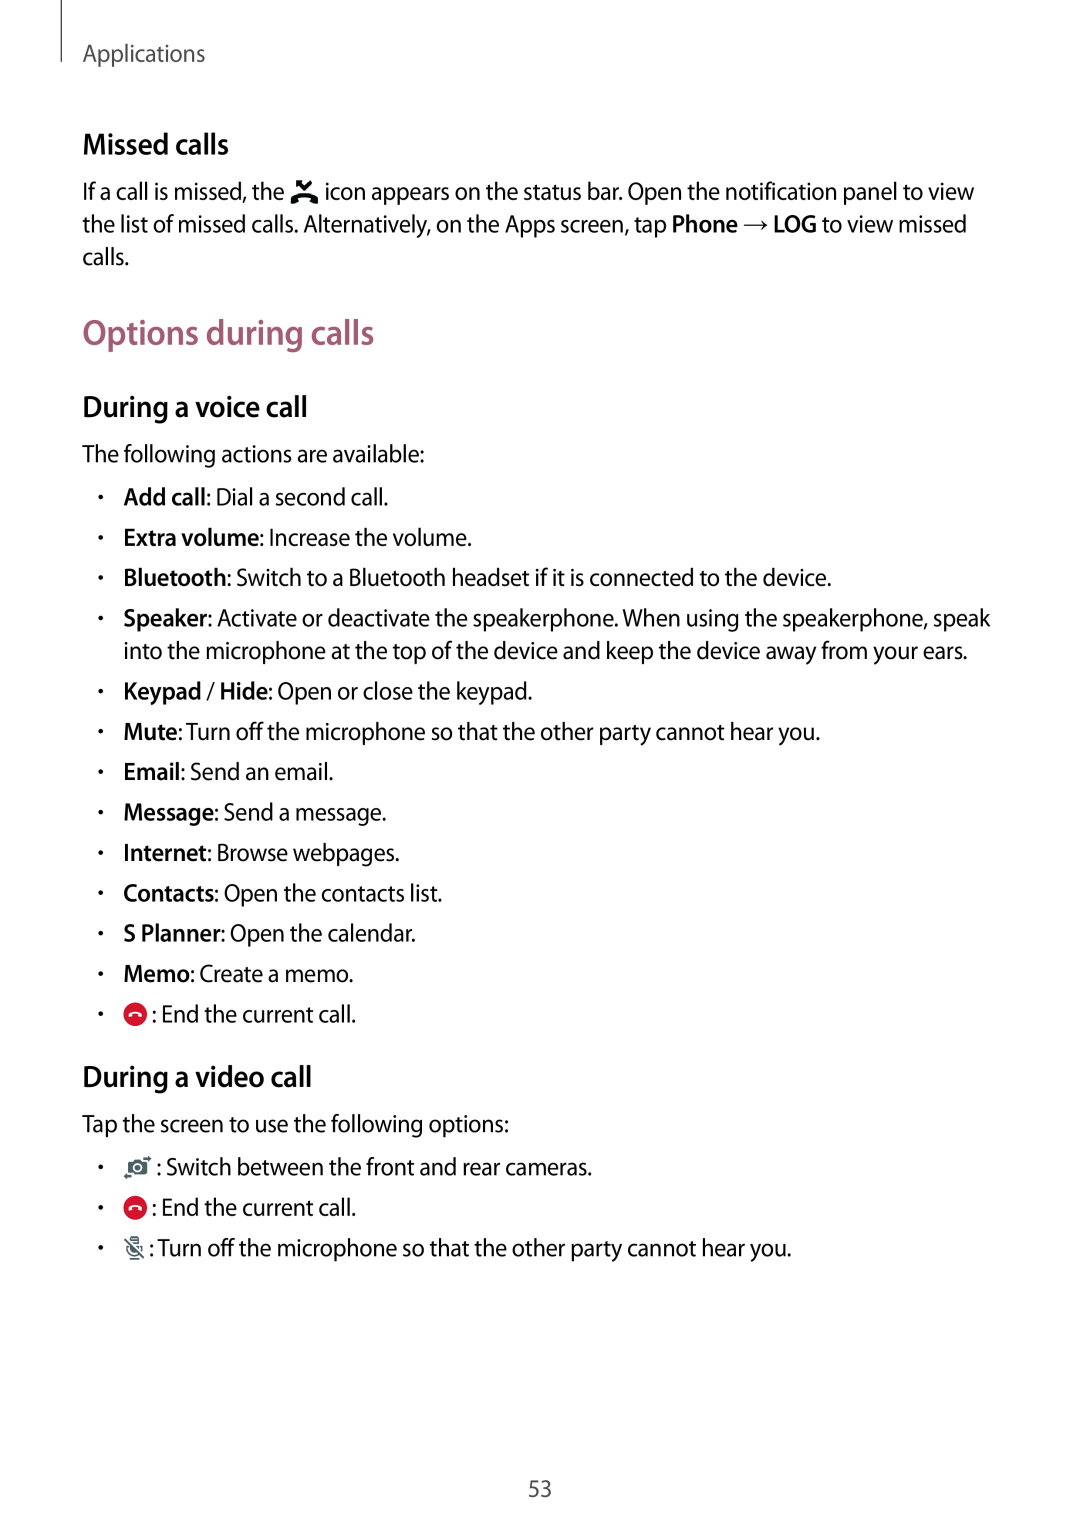 Samsung SM-G920FZWAEUR manual Options during calls, Missed calls, During a voice call, During a video call, Applications 